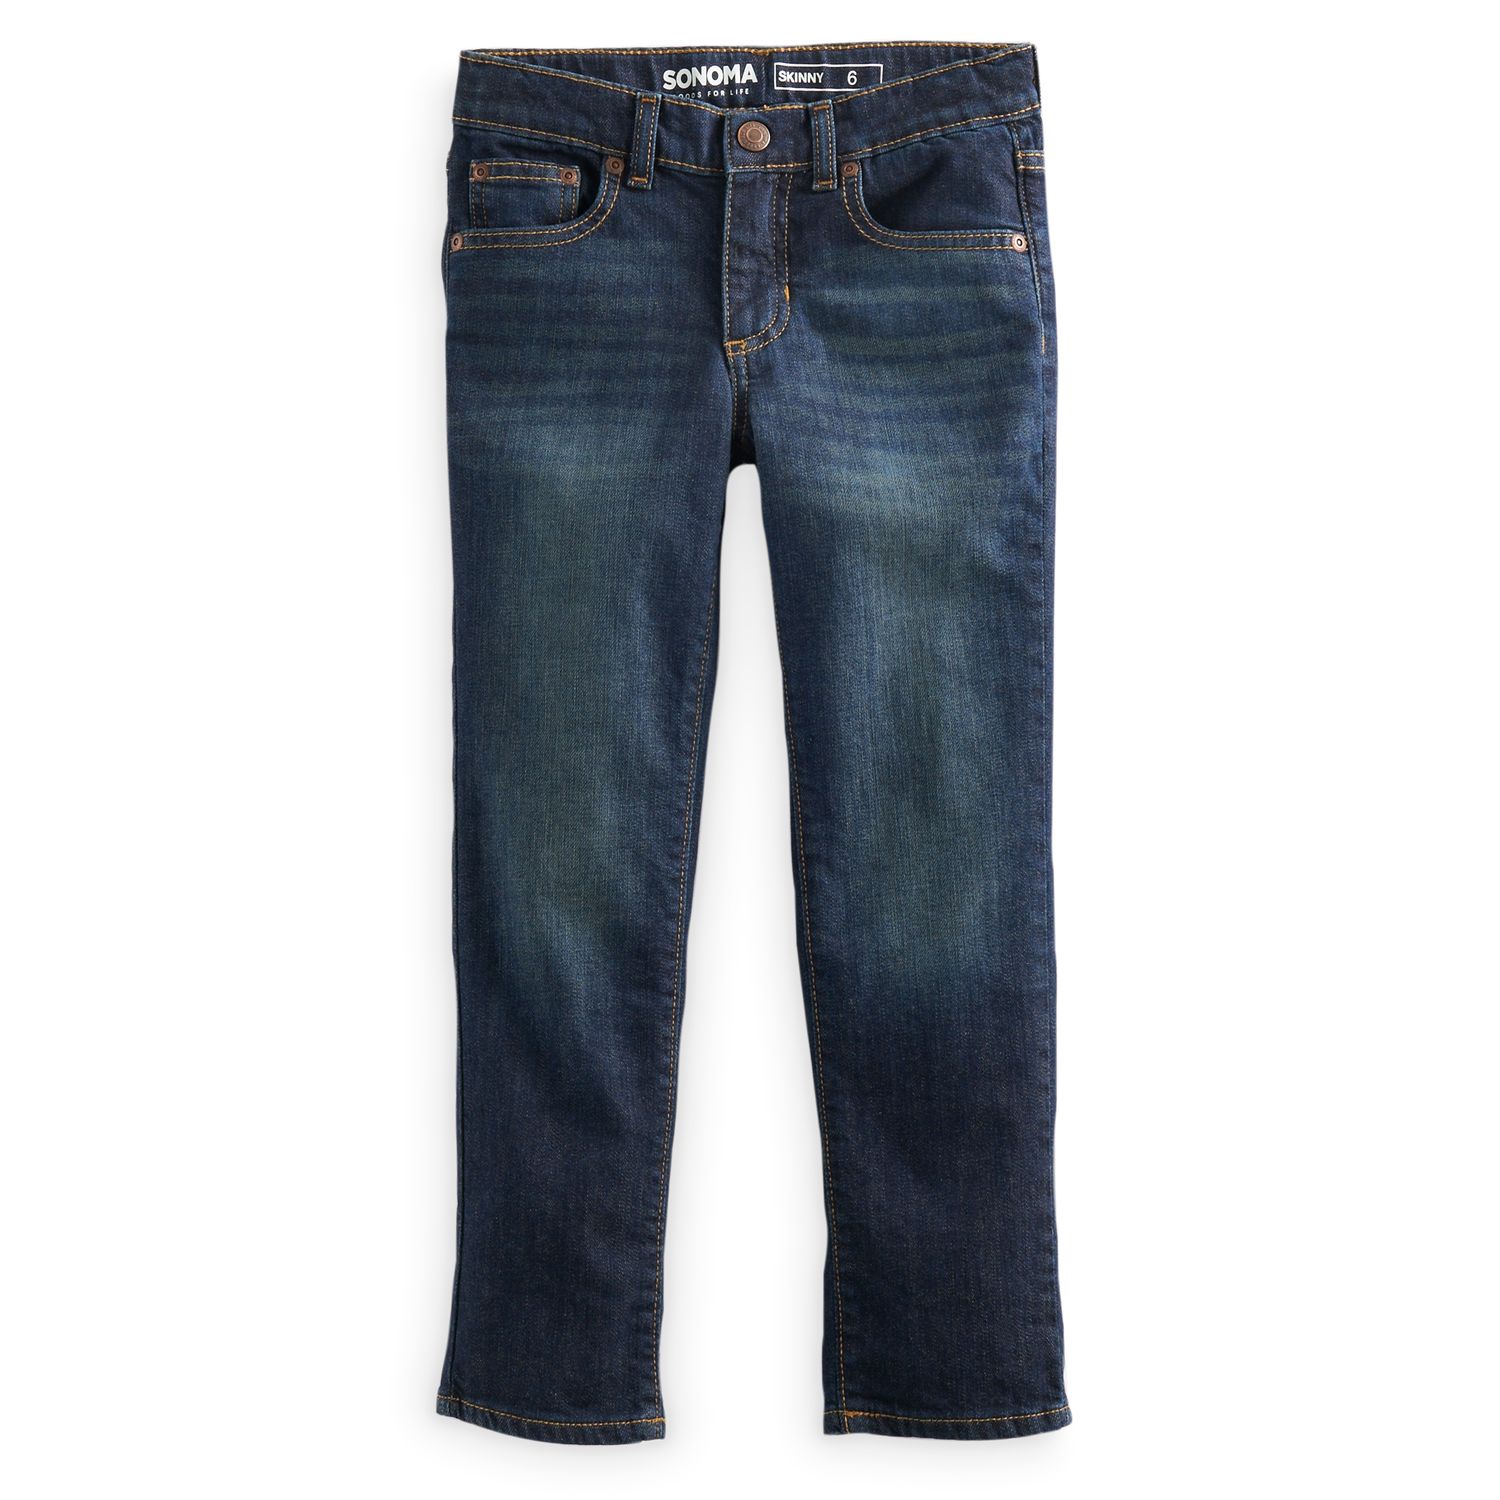 Boys' Jeans: Shop Denim For Boys In All 